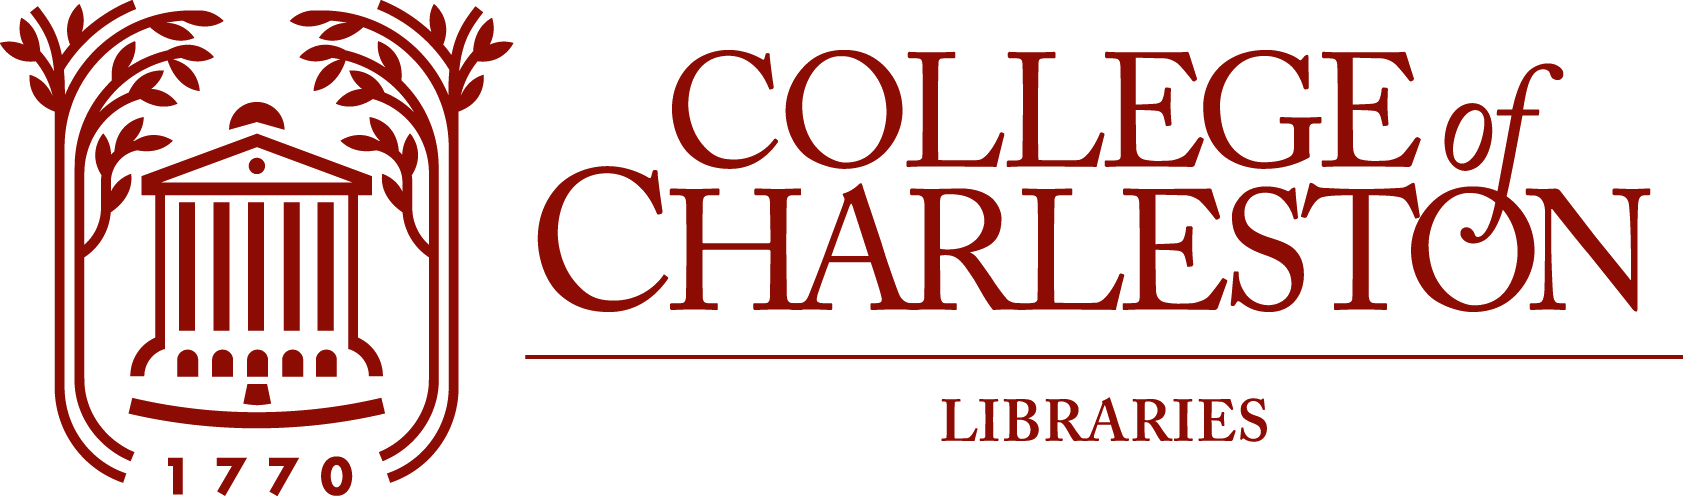 CofC Logo